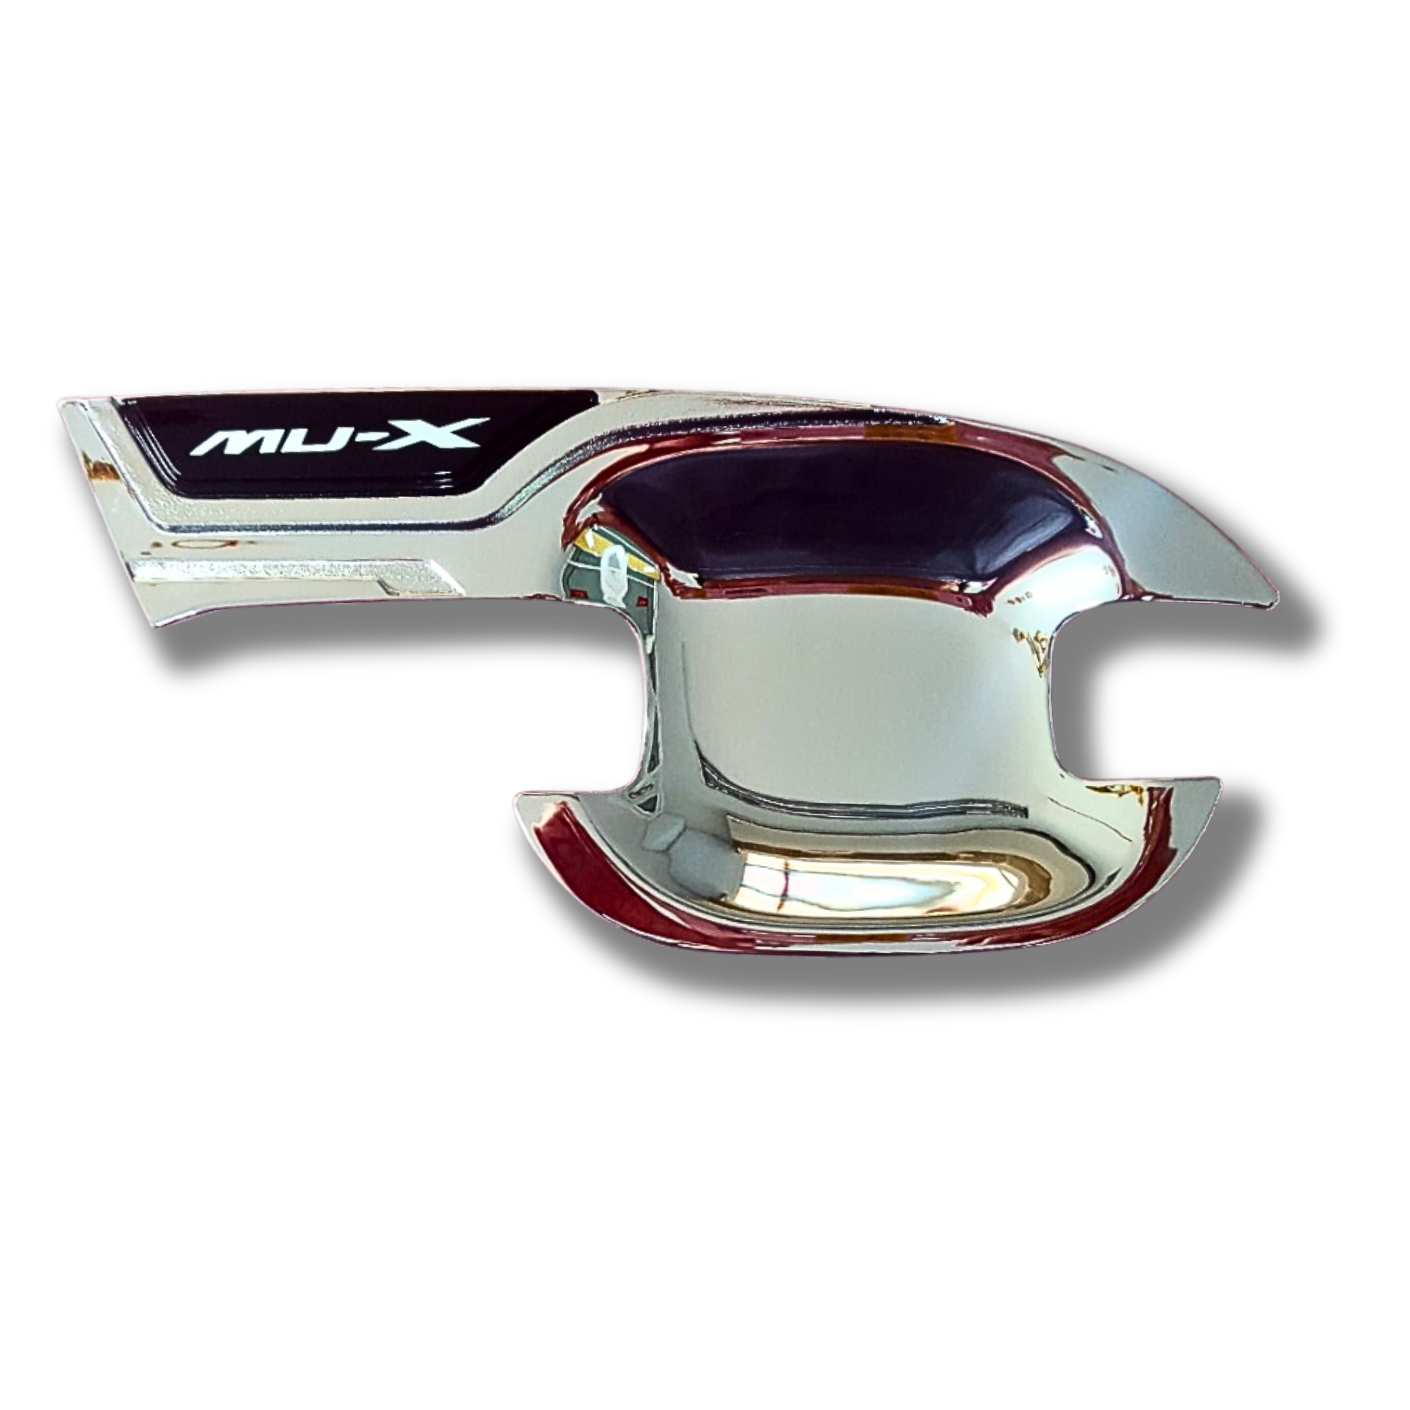 Isuzu MU-X - Door Handle Bowl Cover (2021)